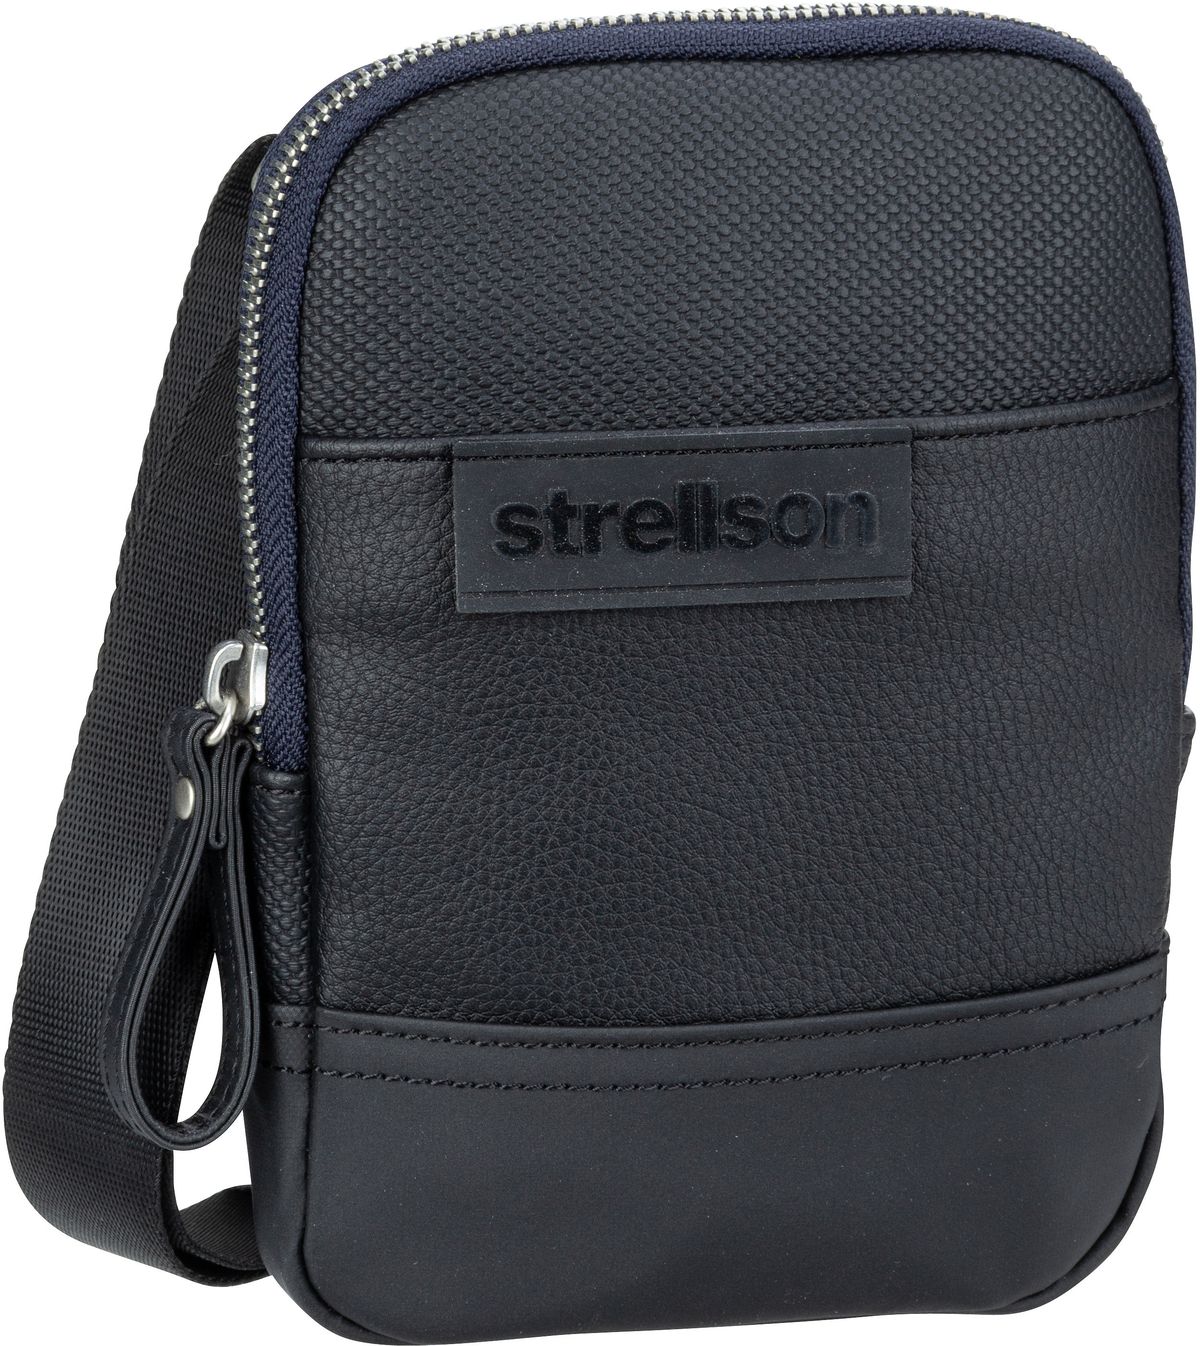 Strellson Royal Oak Brian Shoulderbag XSVZ 1 - Black